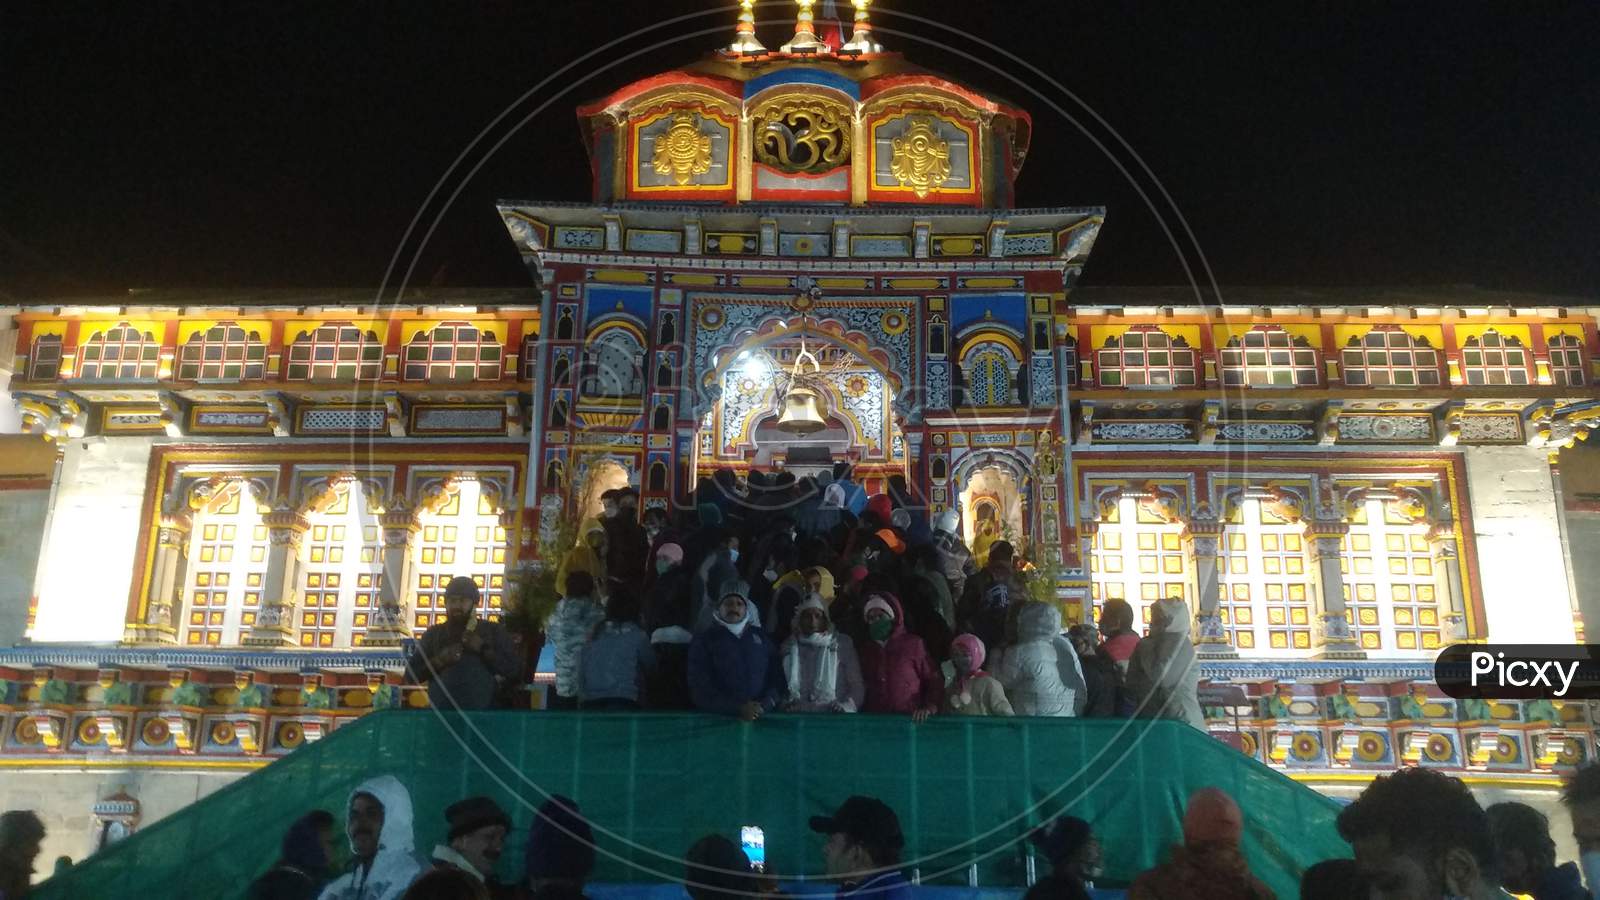 badrinath temple